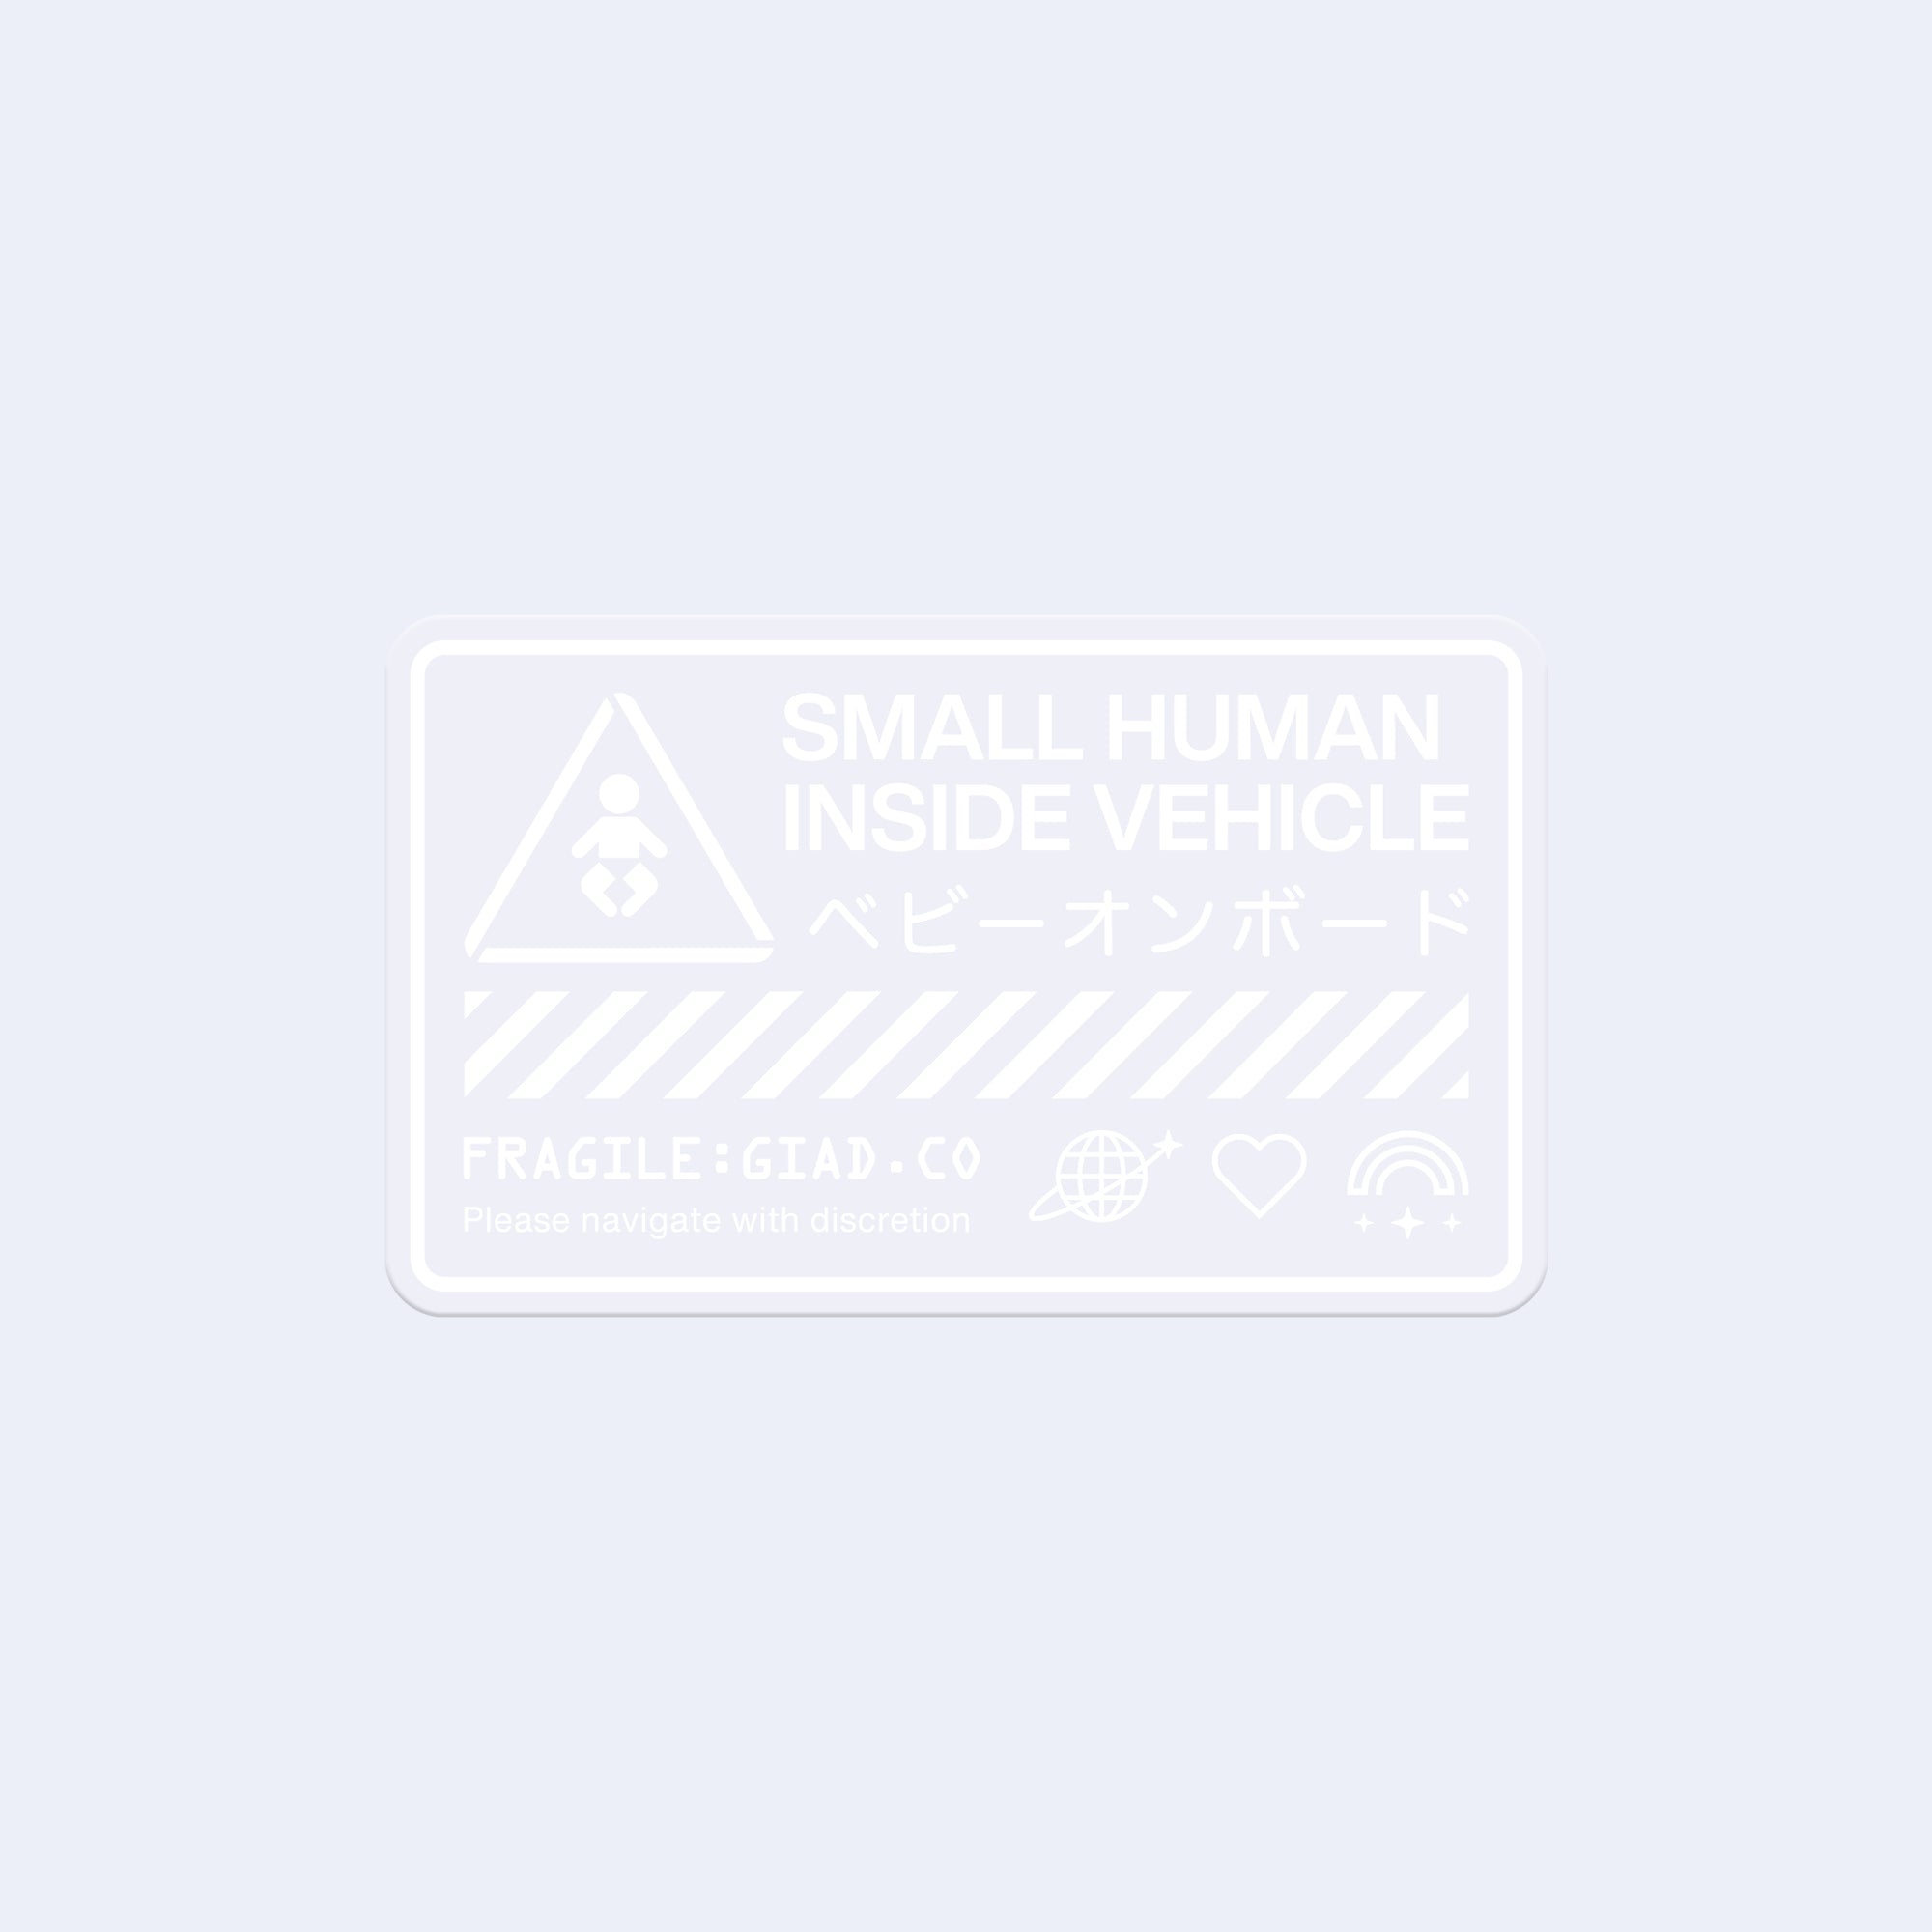 Kid Kreator™ Small Human Vehicle Decal - God is a designer.®